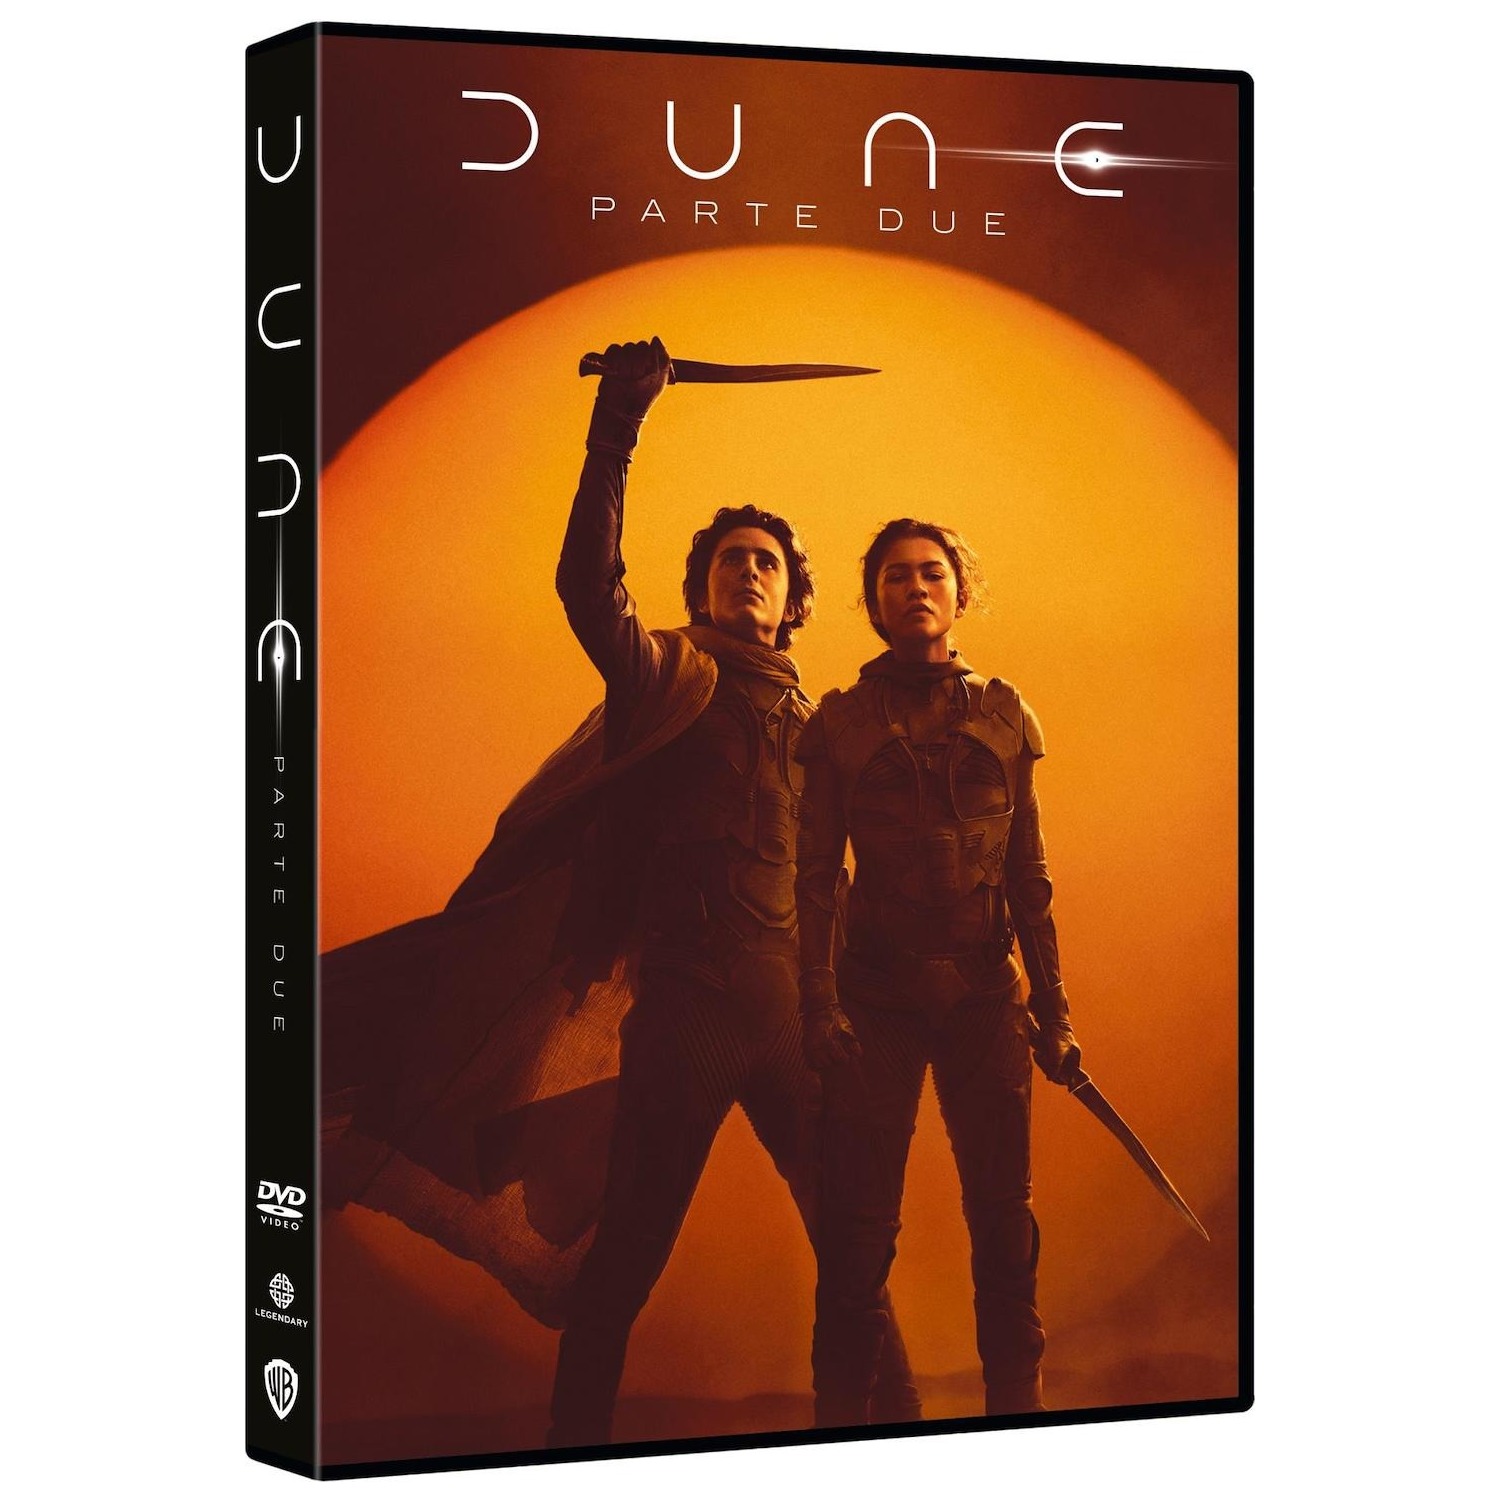 Immagine per DVD Dune: Parte Due da DIMOStore